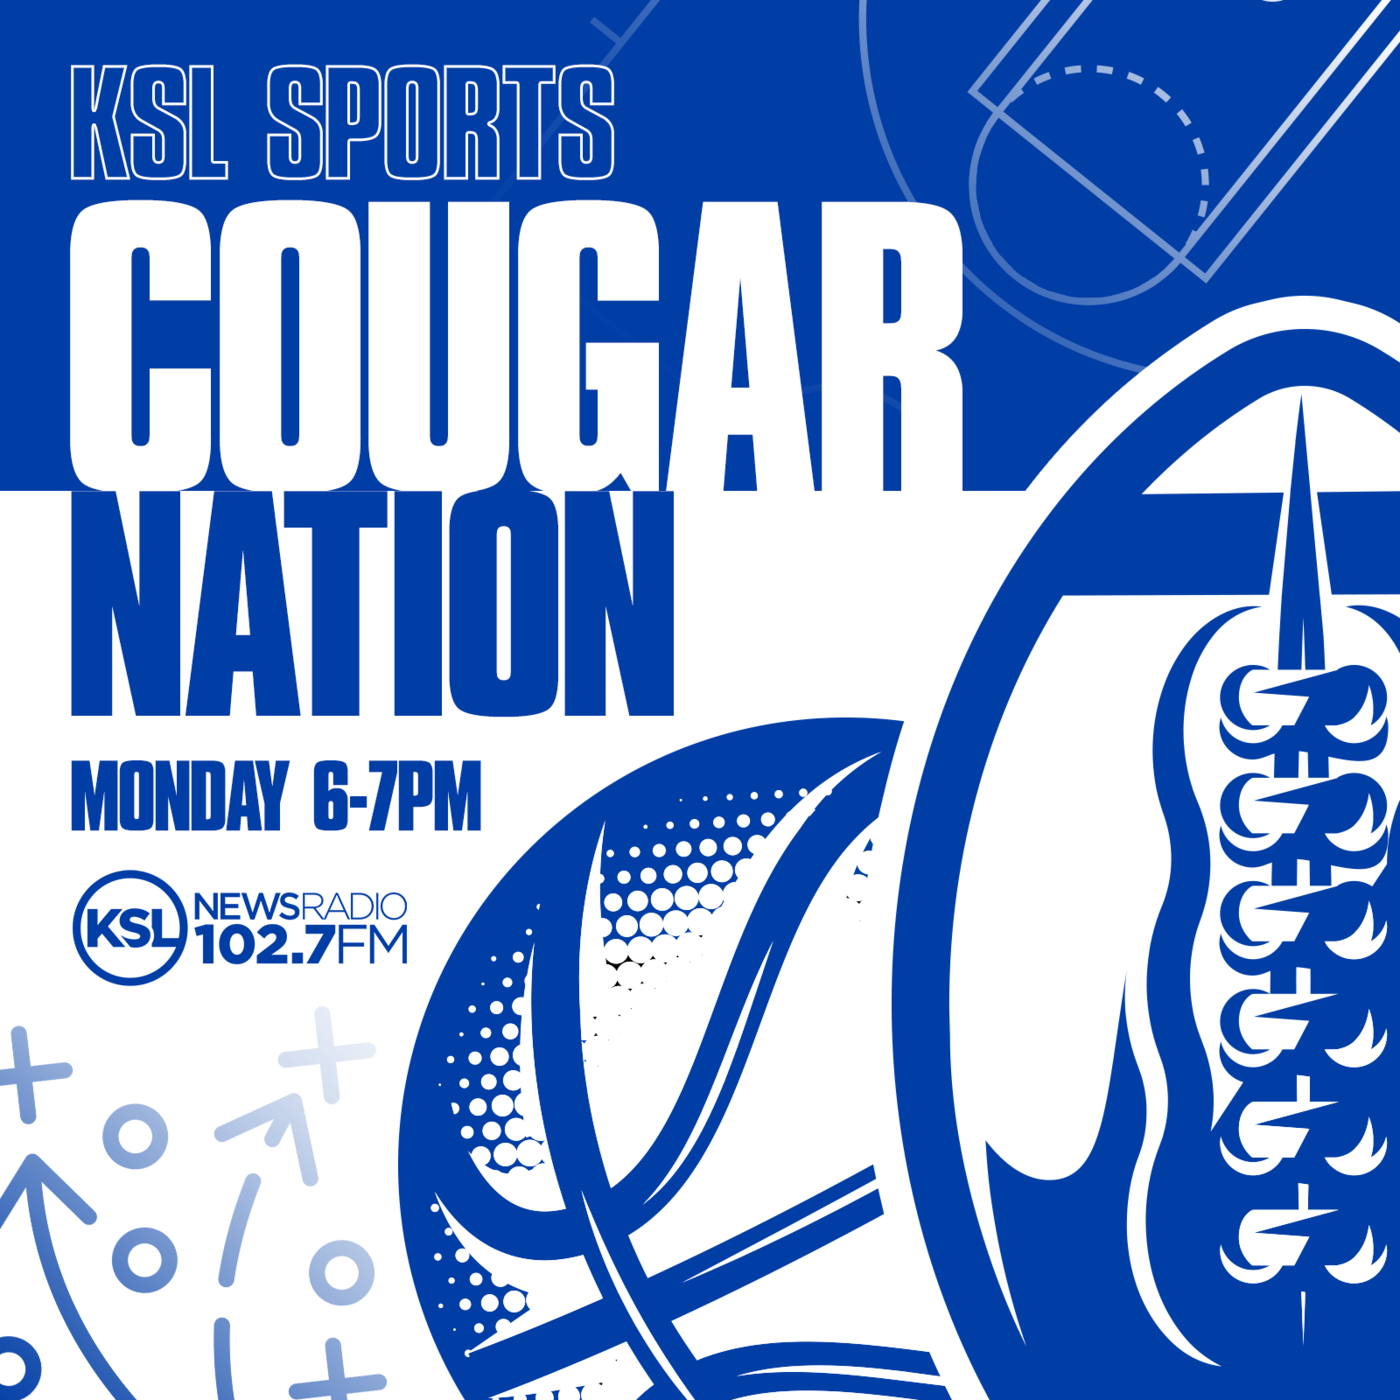 Cougar Nation at the Big 12 Tournament in Kansas City